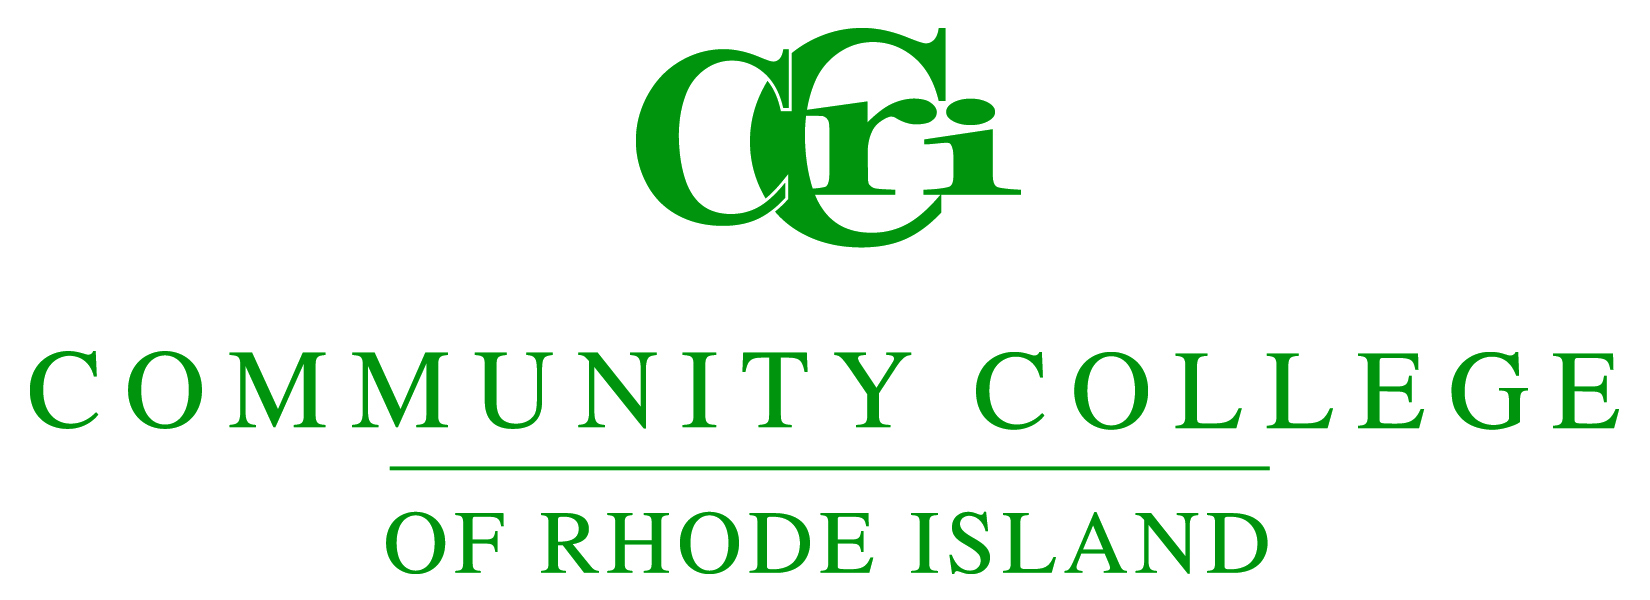  Community College of Rhode Island